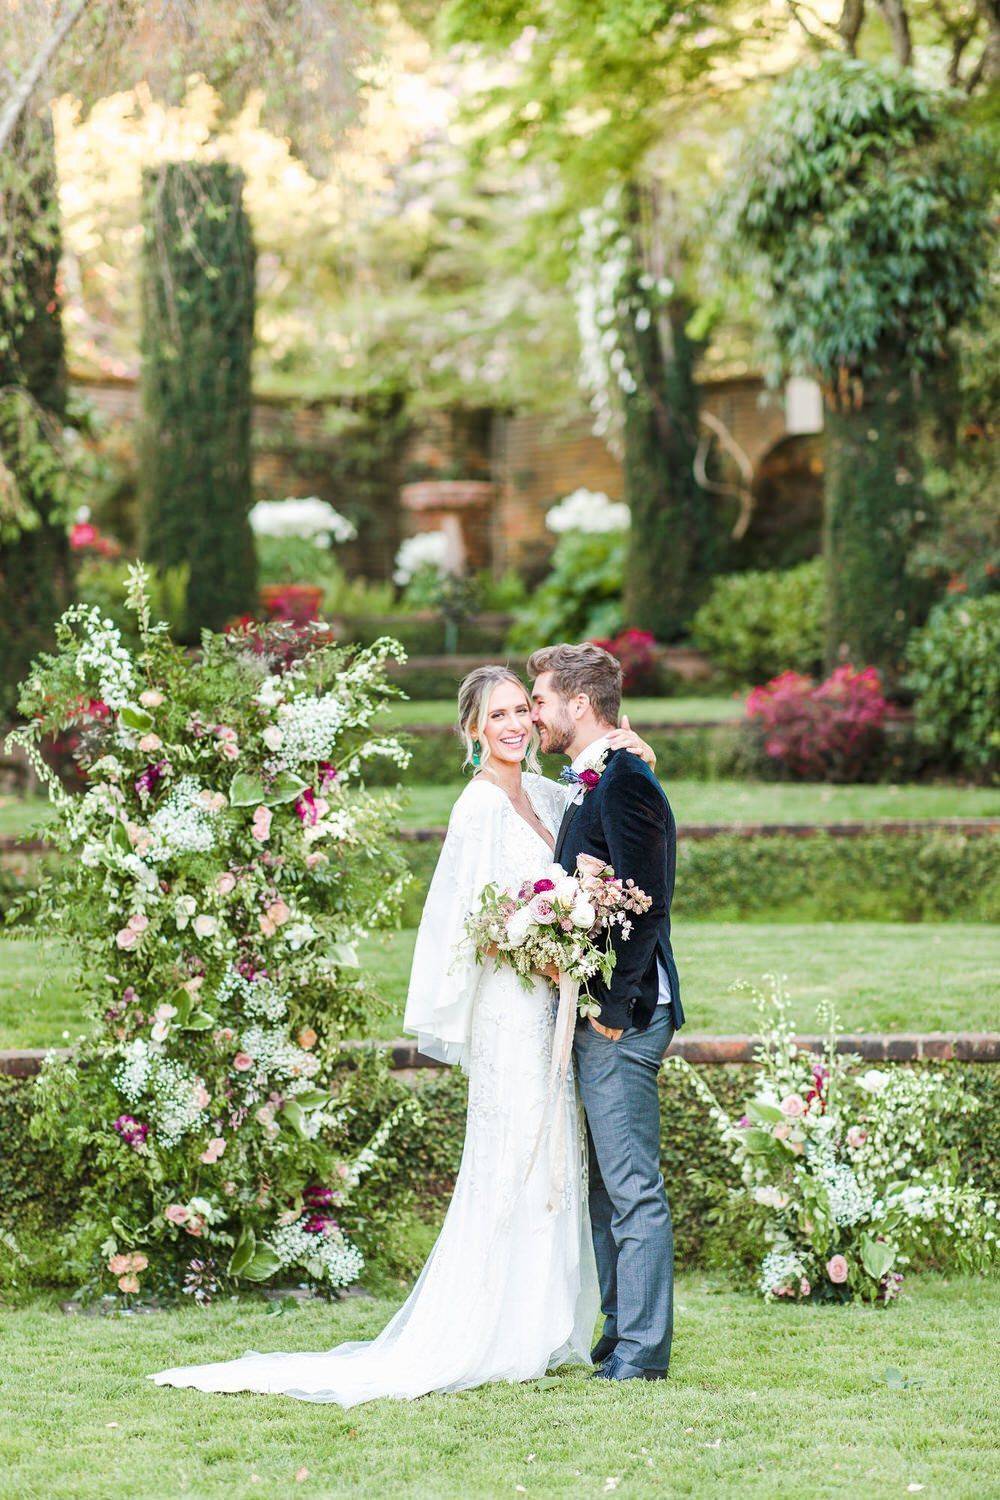 Beautiful And Romantic Garden Wedding Ideas